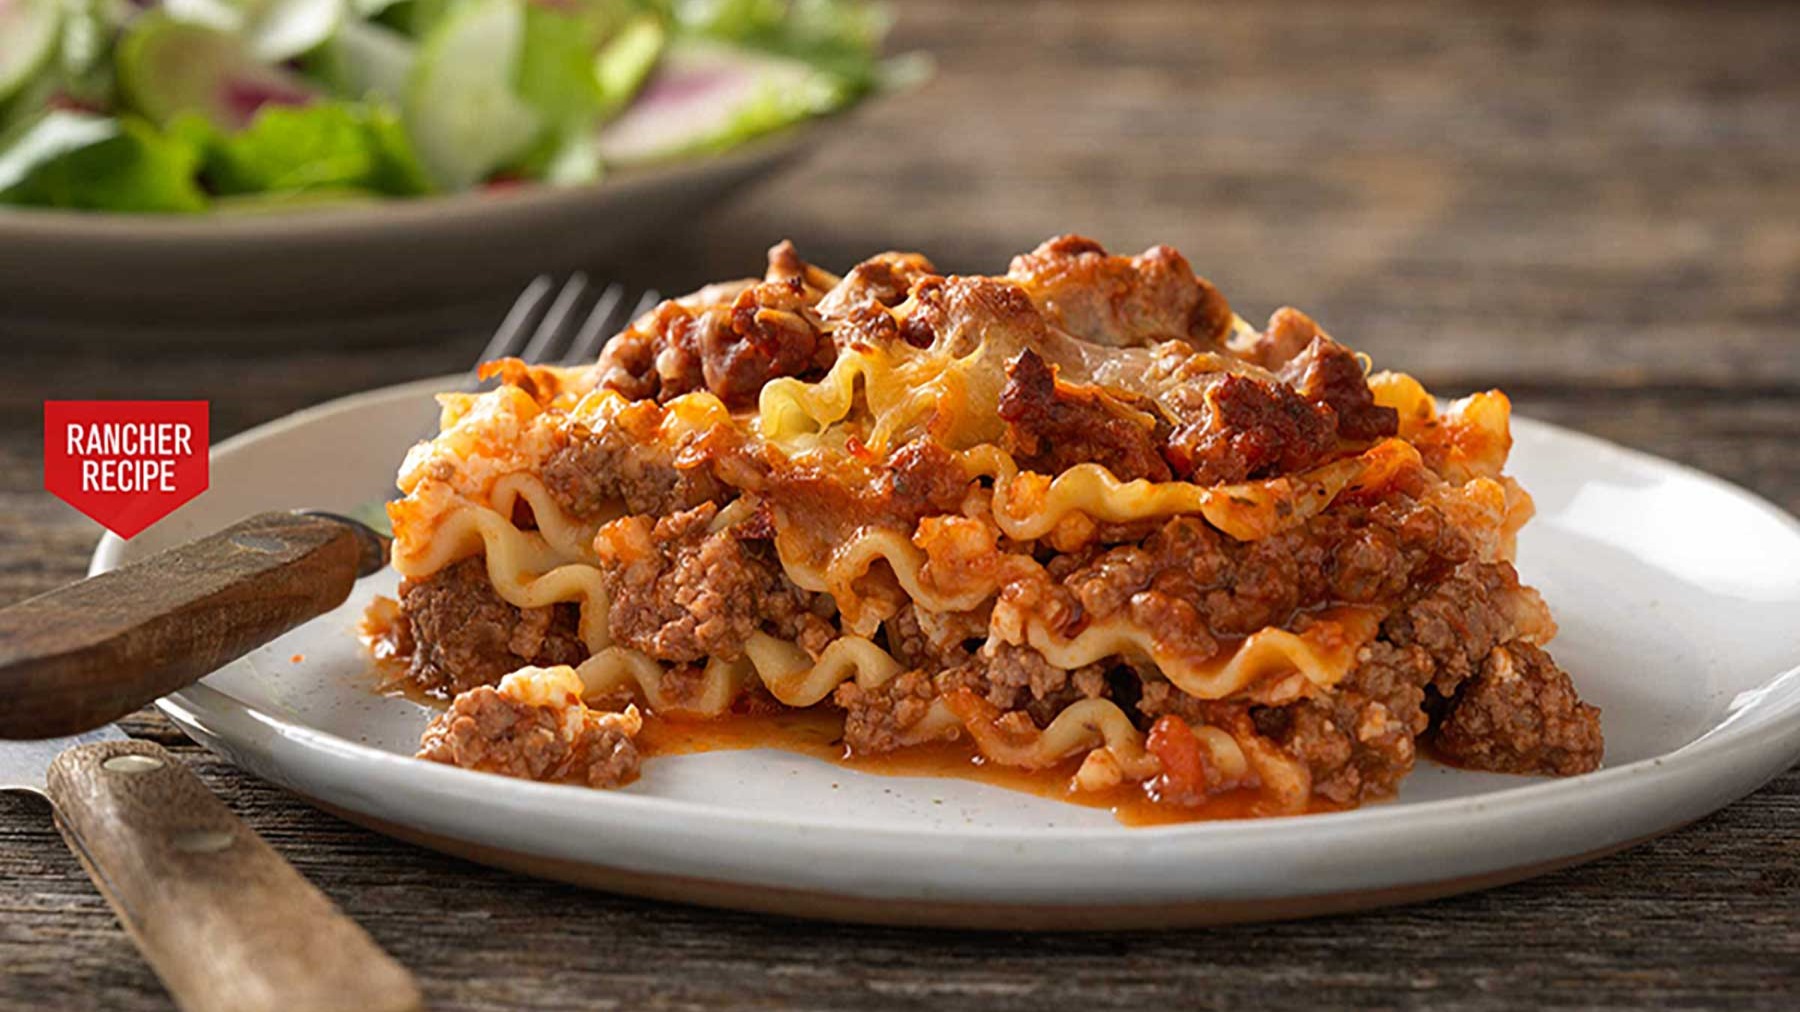 http://www.beefitswhatsfordinner.com/Media/BIWFD/Images/rancher-recipe-farmous-lasagna-horizontal-with-icon-2.jpg